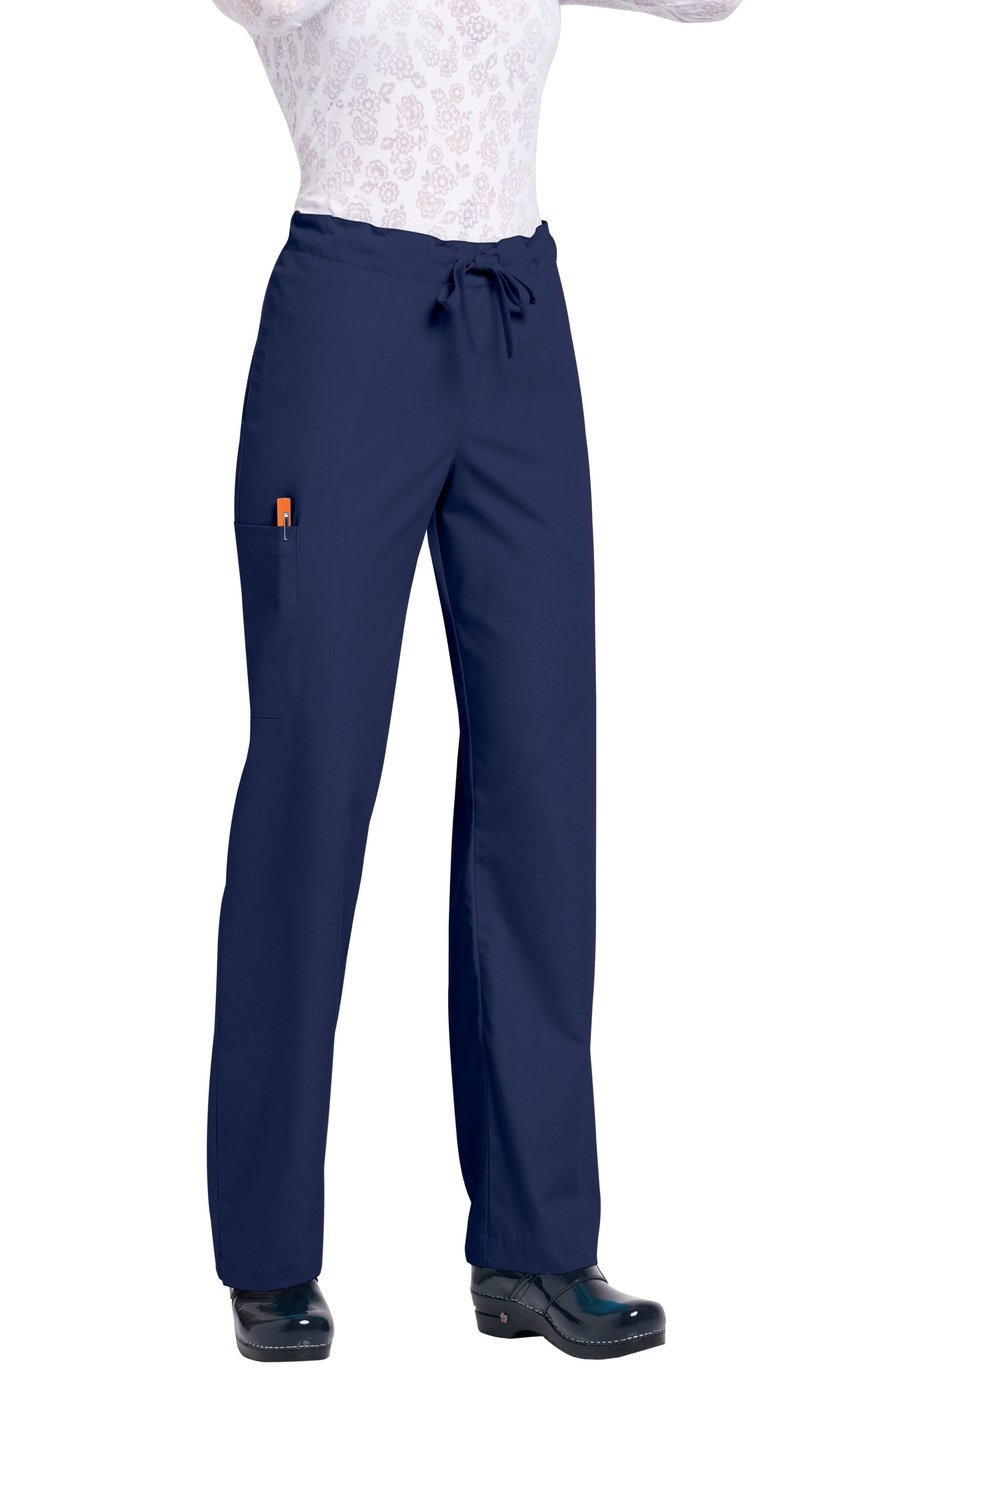 Pantalone ORANGE HUNTINGTON Colore 12. Navy